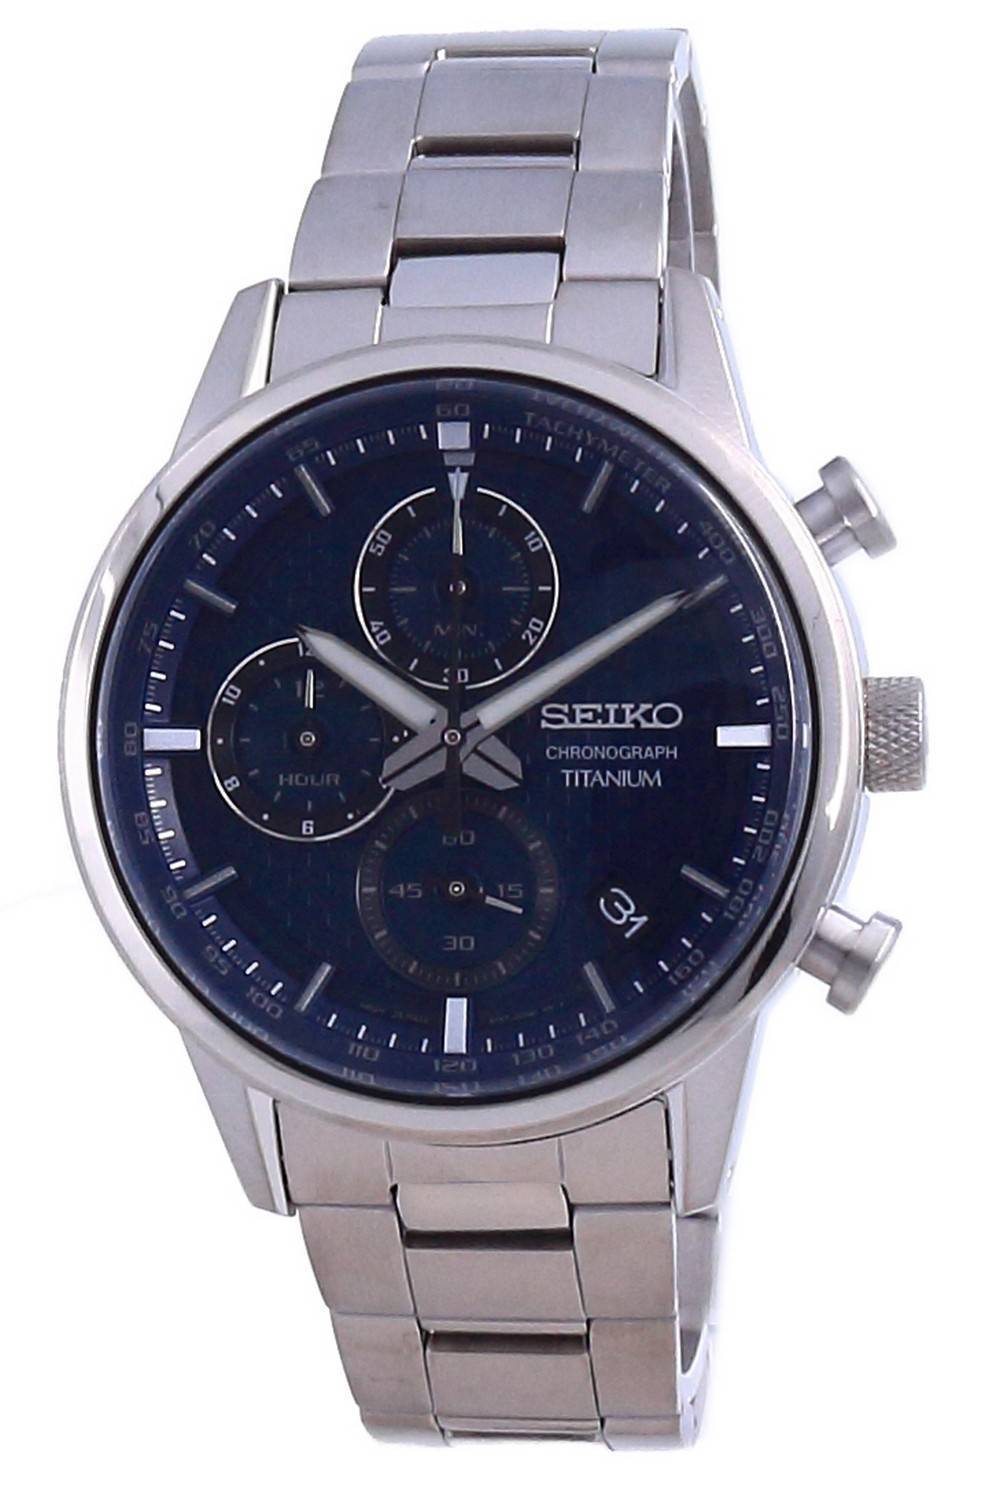 Seiko Discover More Titanium Nubo SSB387 Chronograph SSB387P1 Watches SSB387 – Quartz